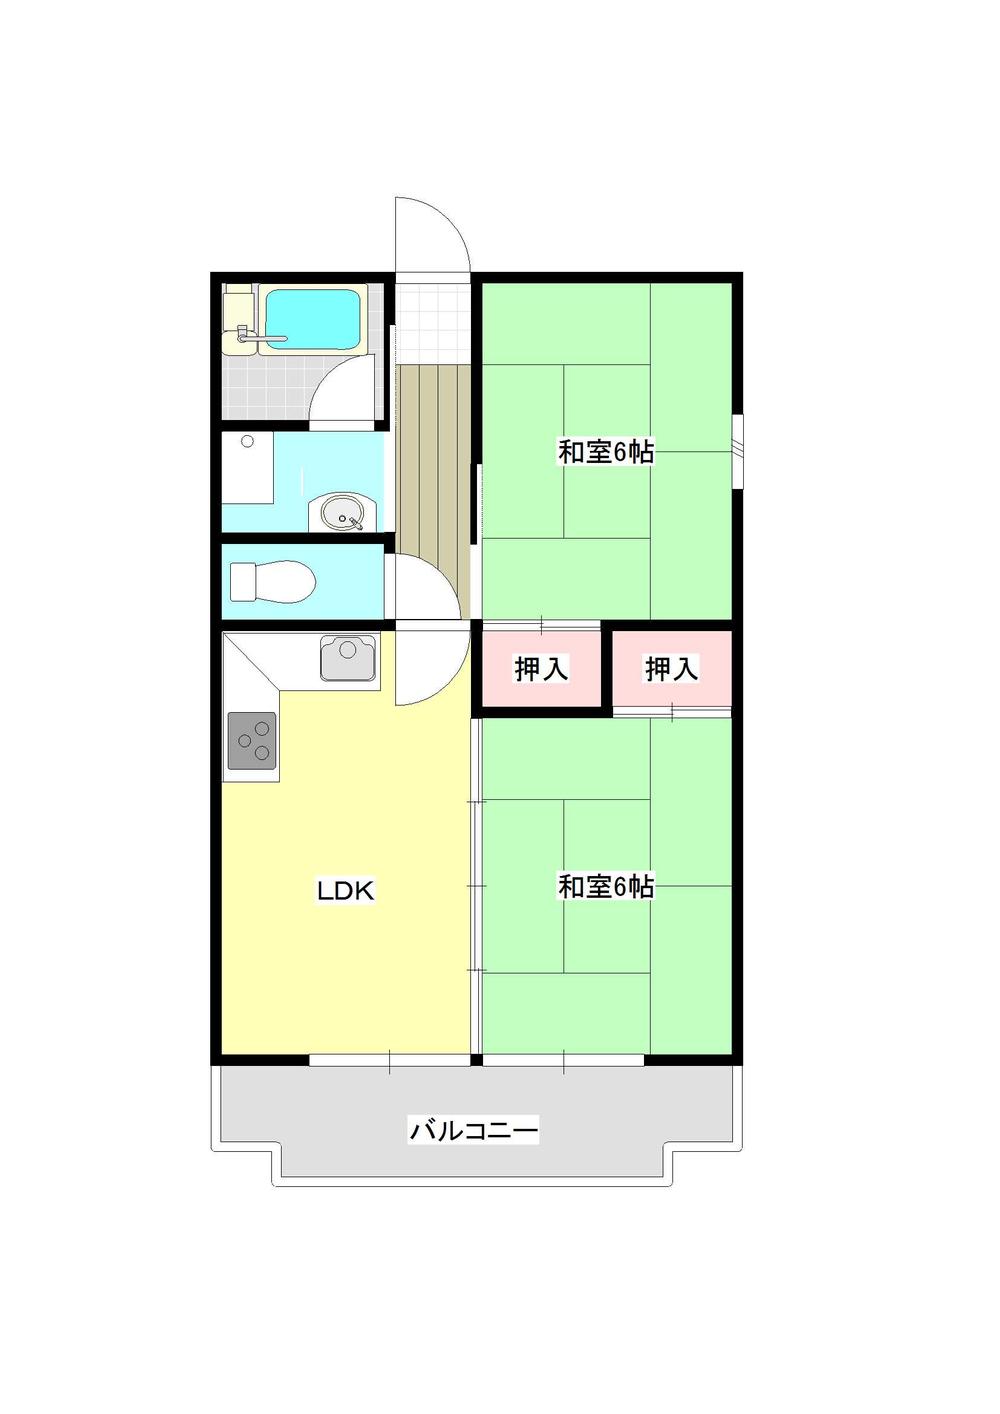 Floor plan. 2DK, Price 2.8 million yen, Occupied area 38.07 sq m , Balcony area 4.87 sq m